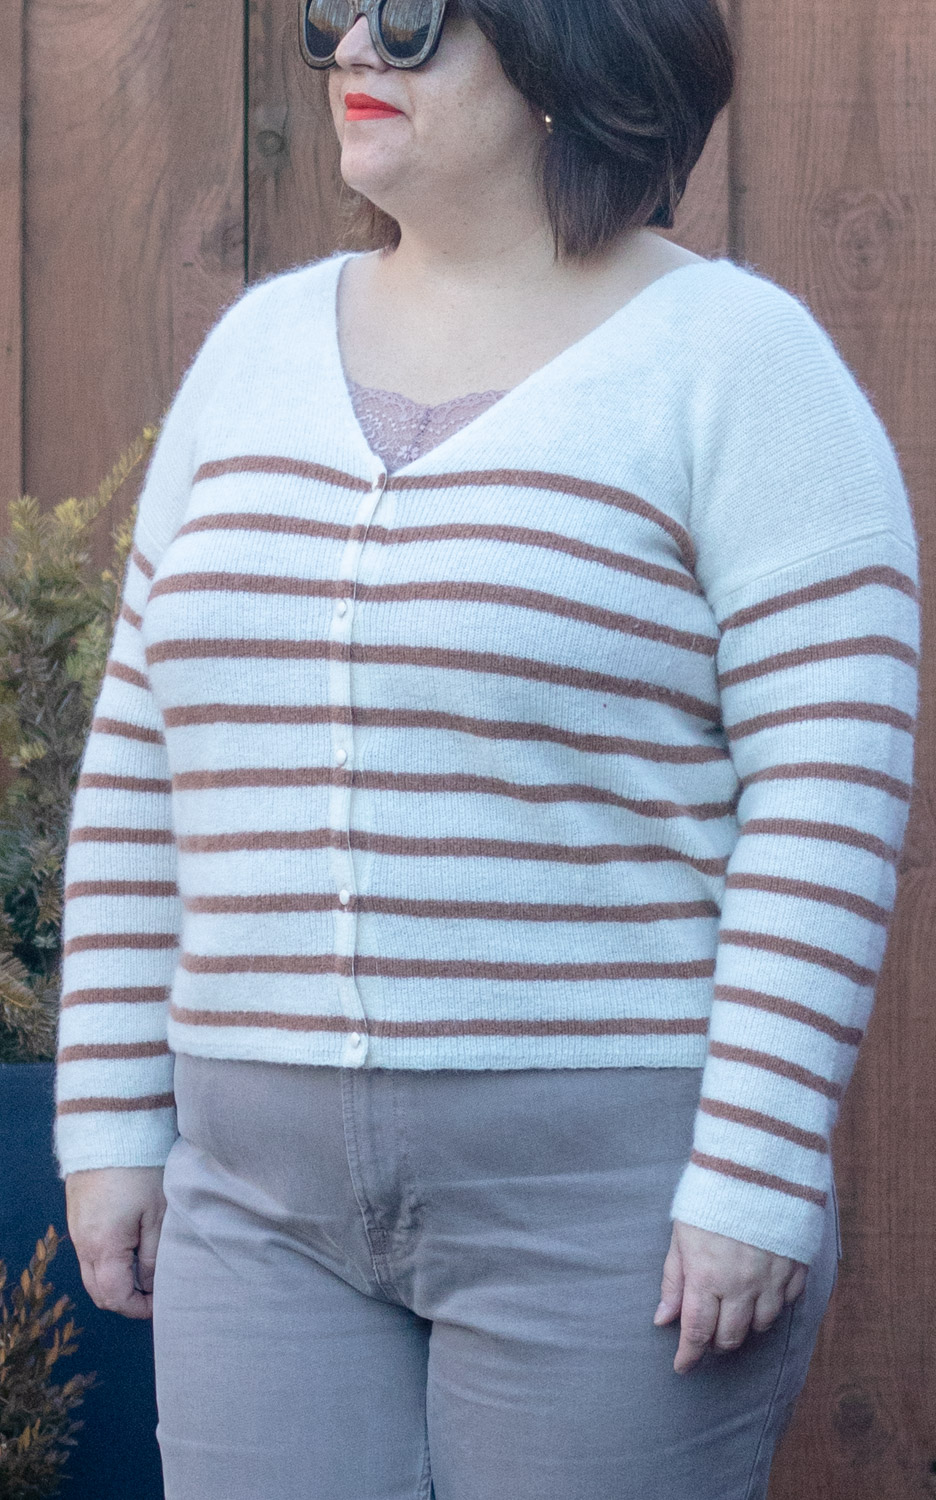 sezane barry cardigan sweater